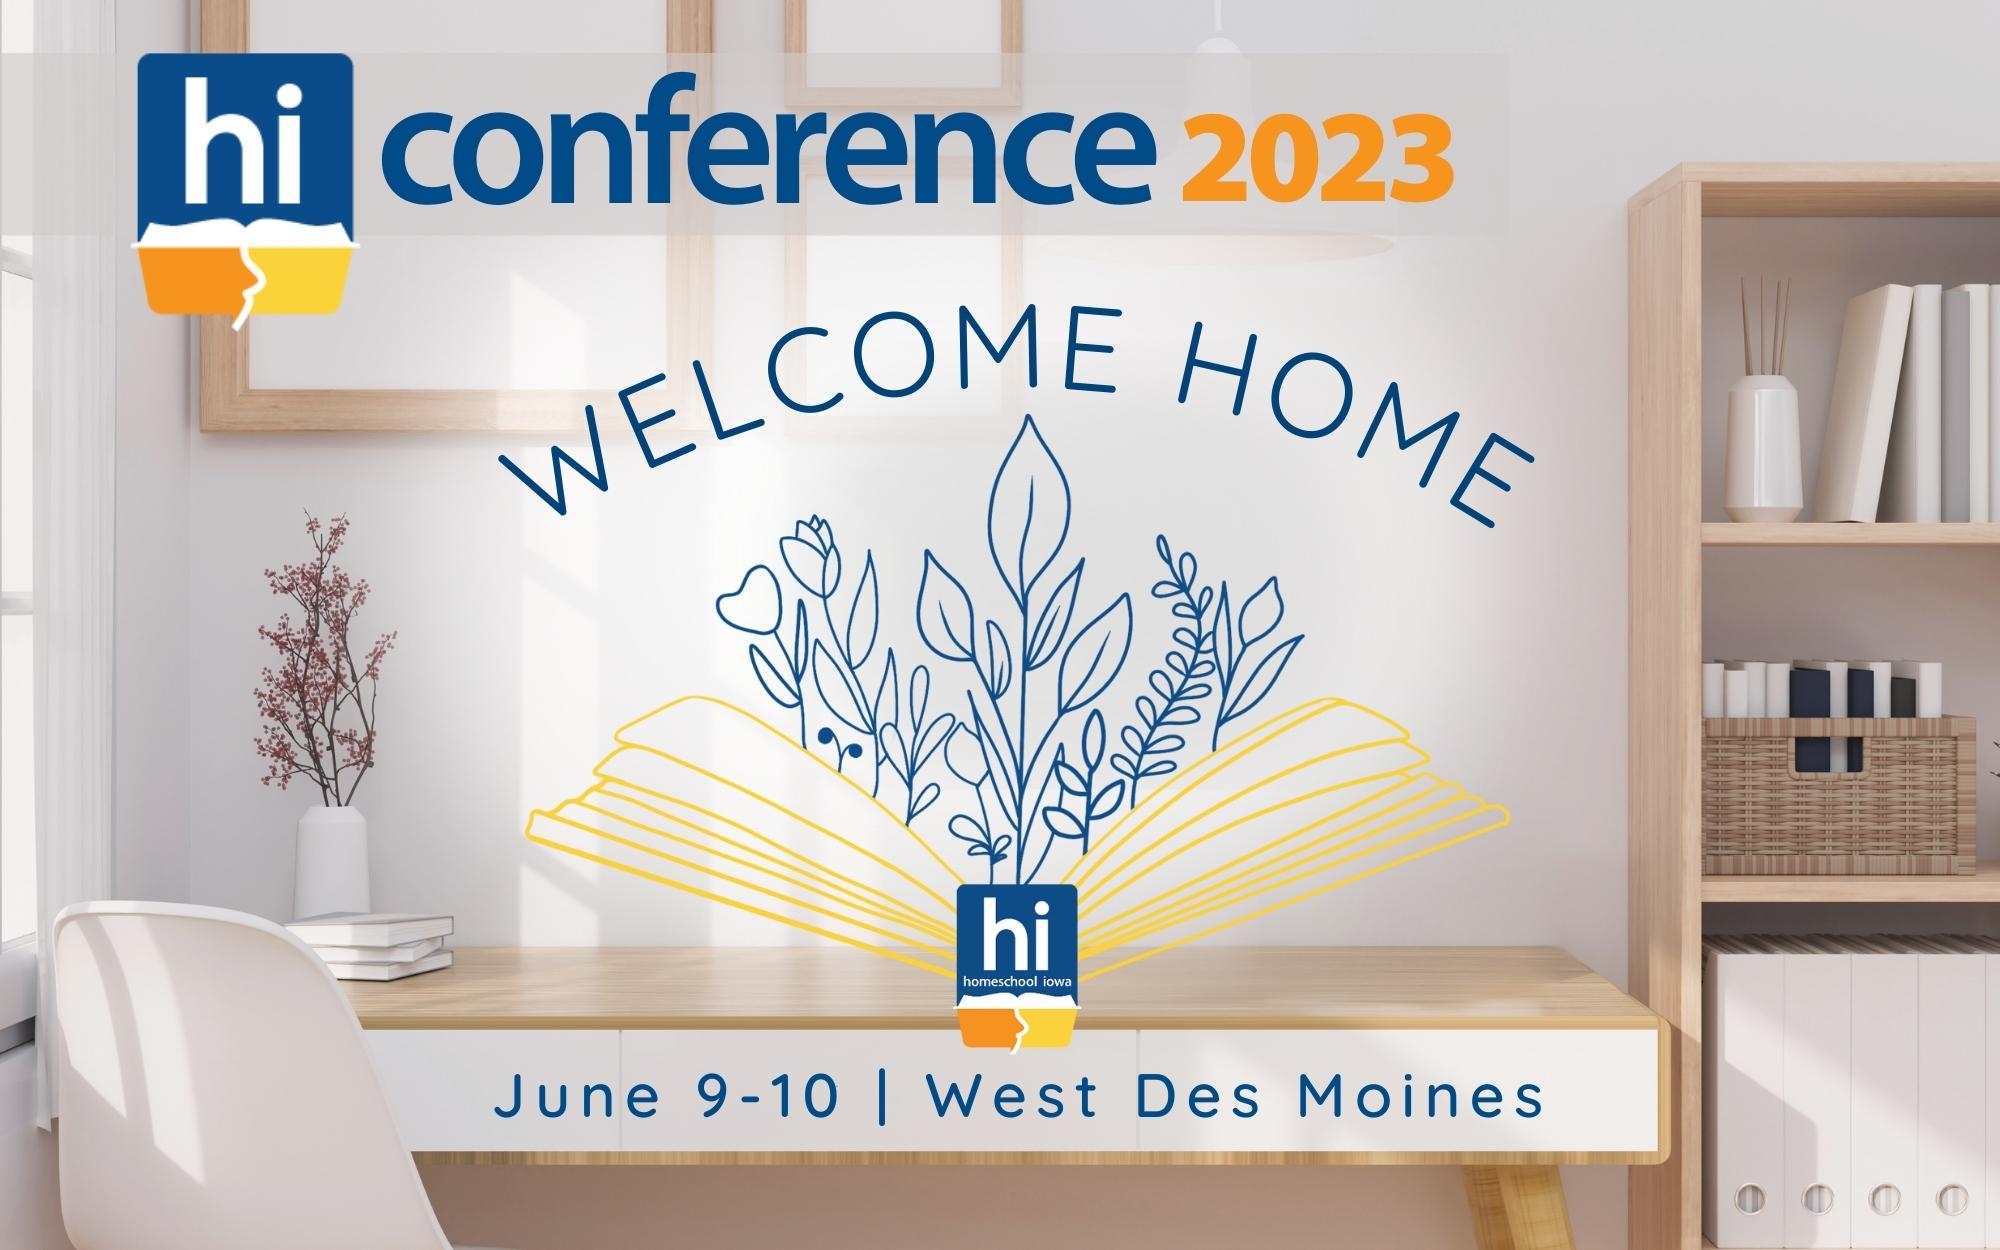 2023 Homeschool Iowa Conference